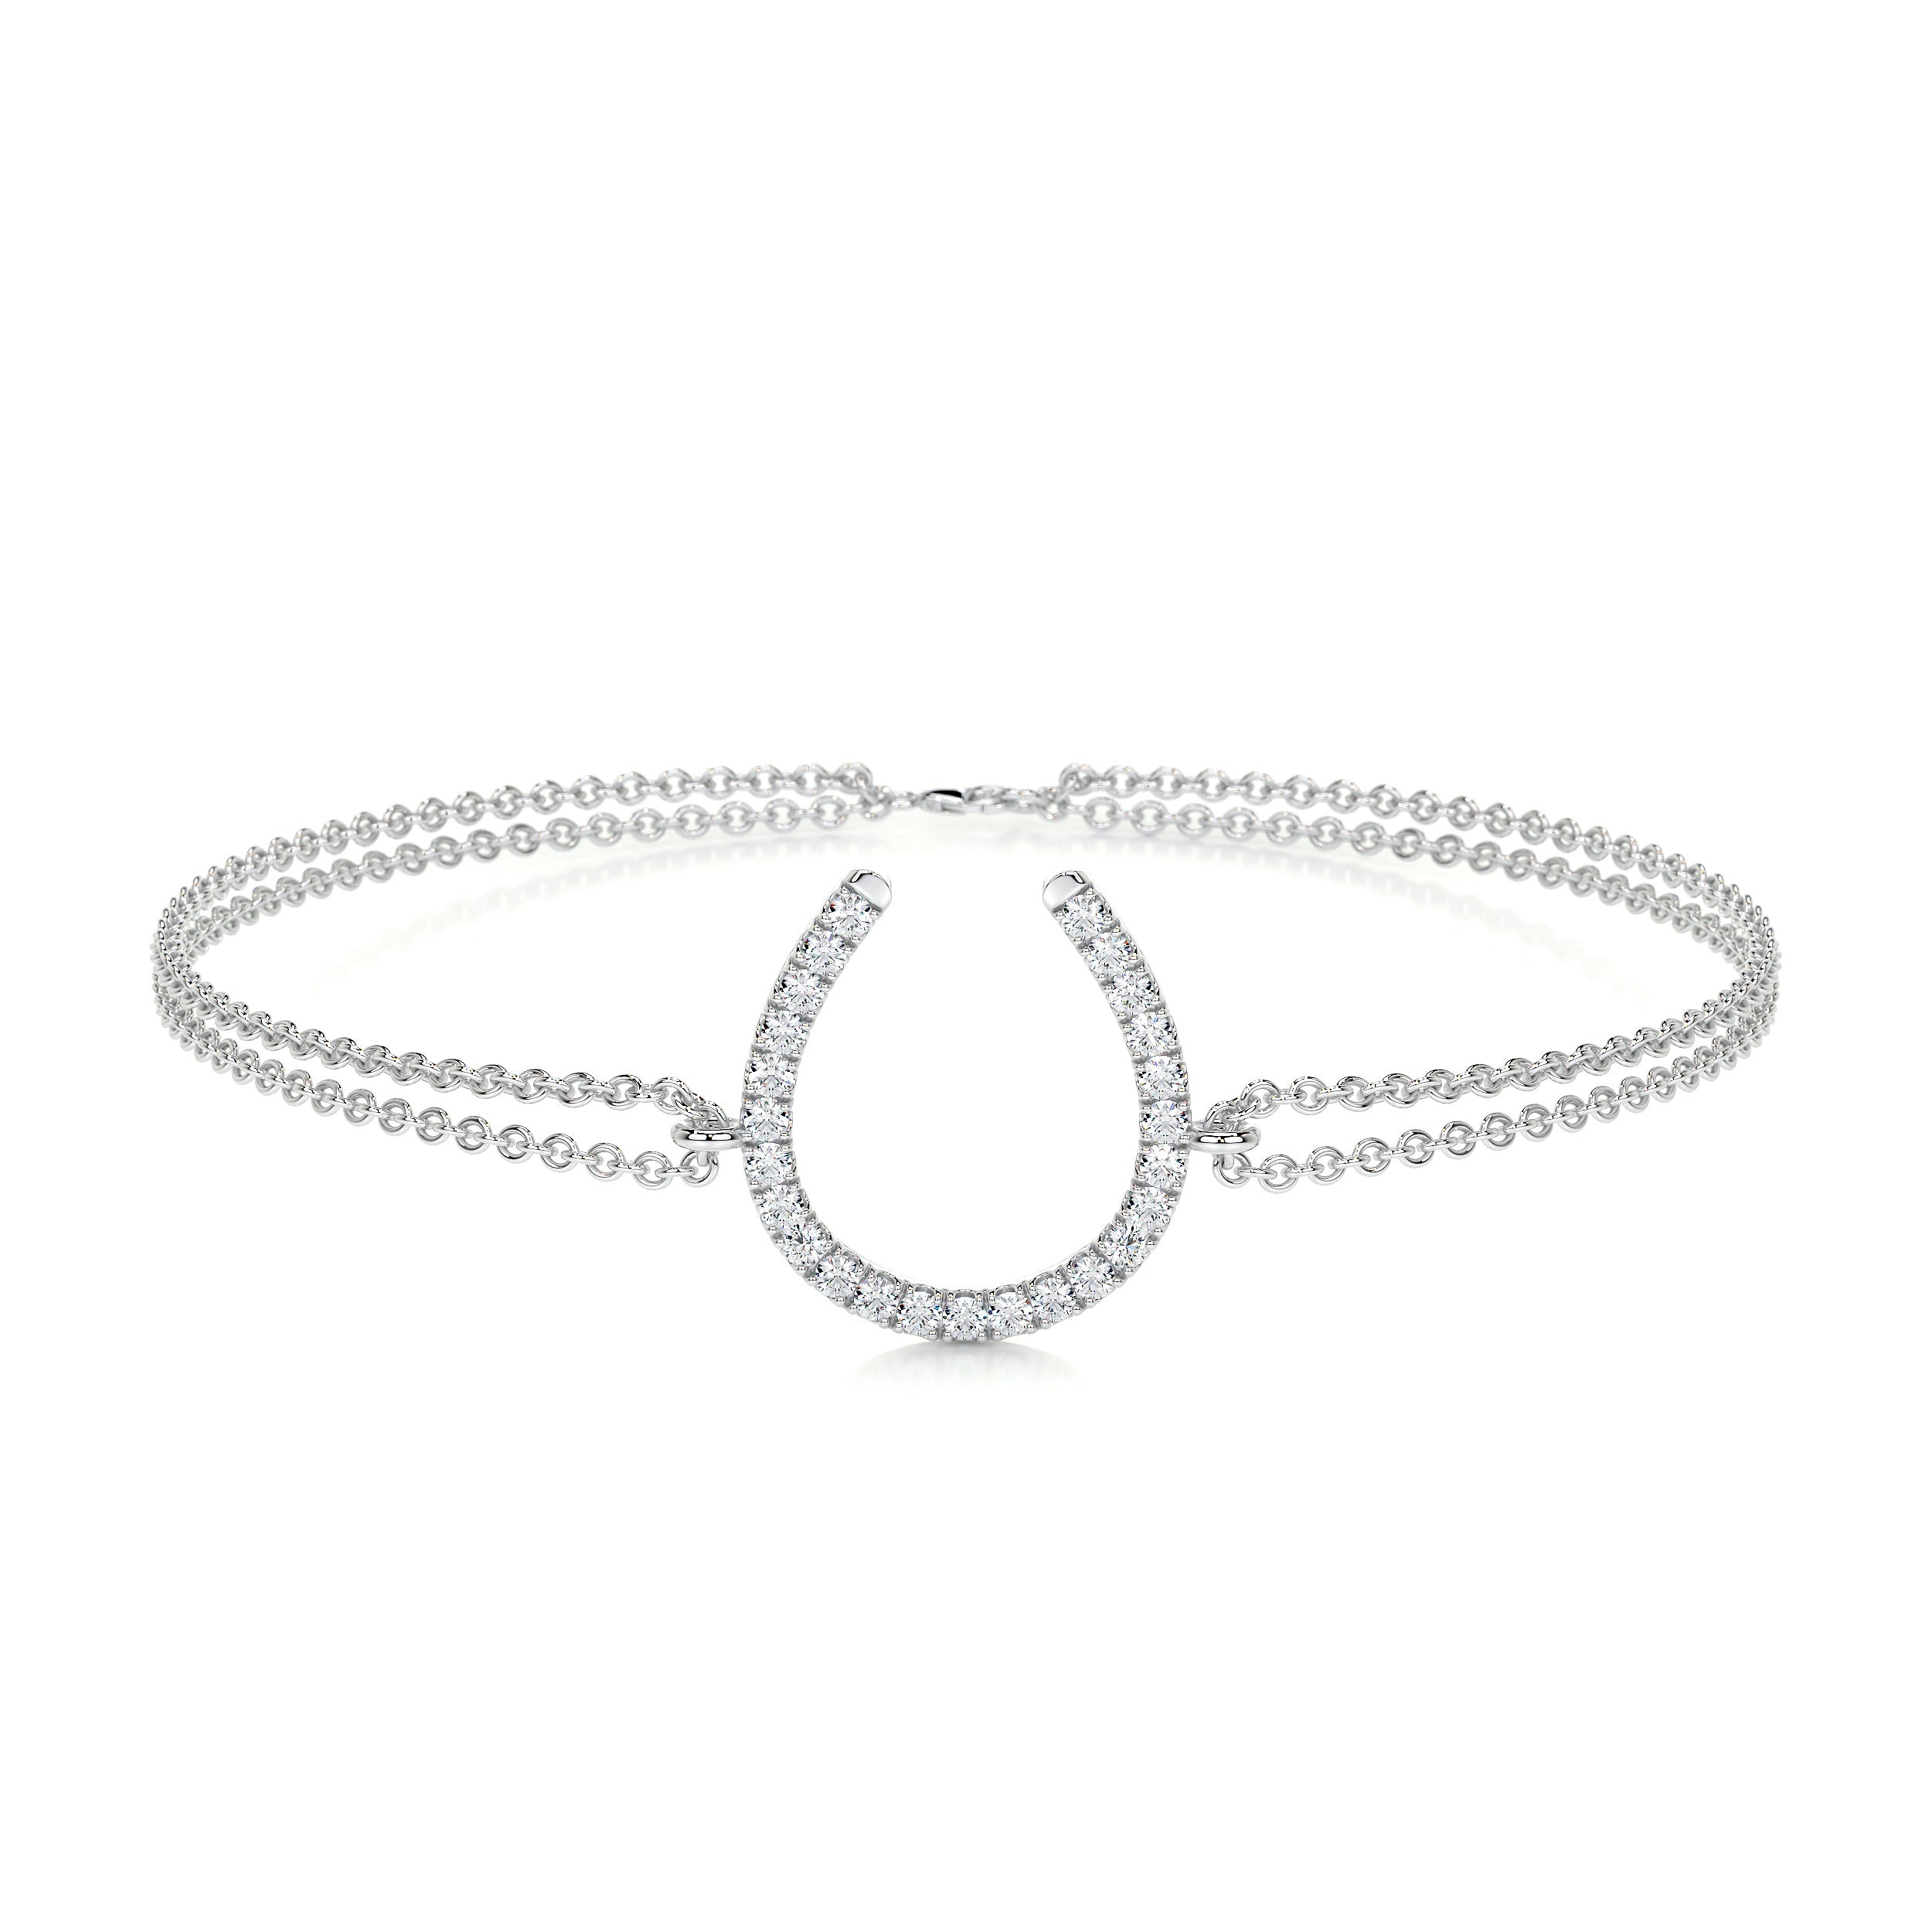 Horseshoe Diamonds Bracelet   (0.20 Carat) -14K White Gold